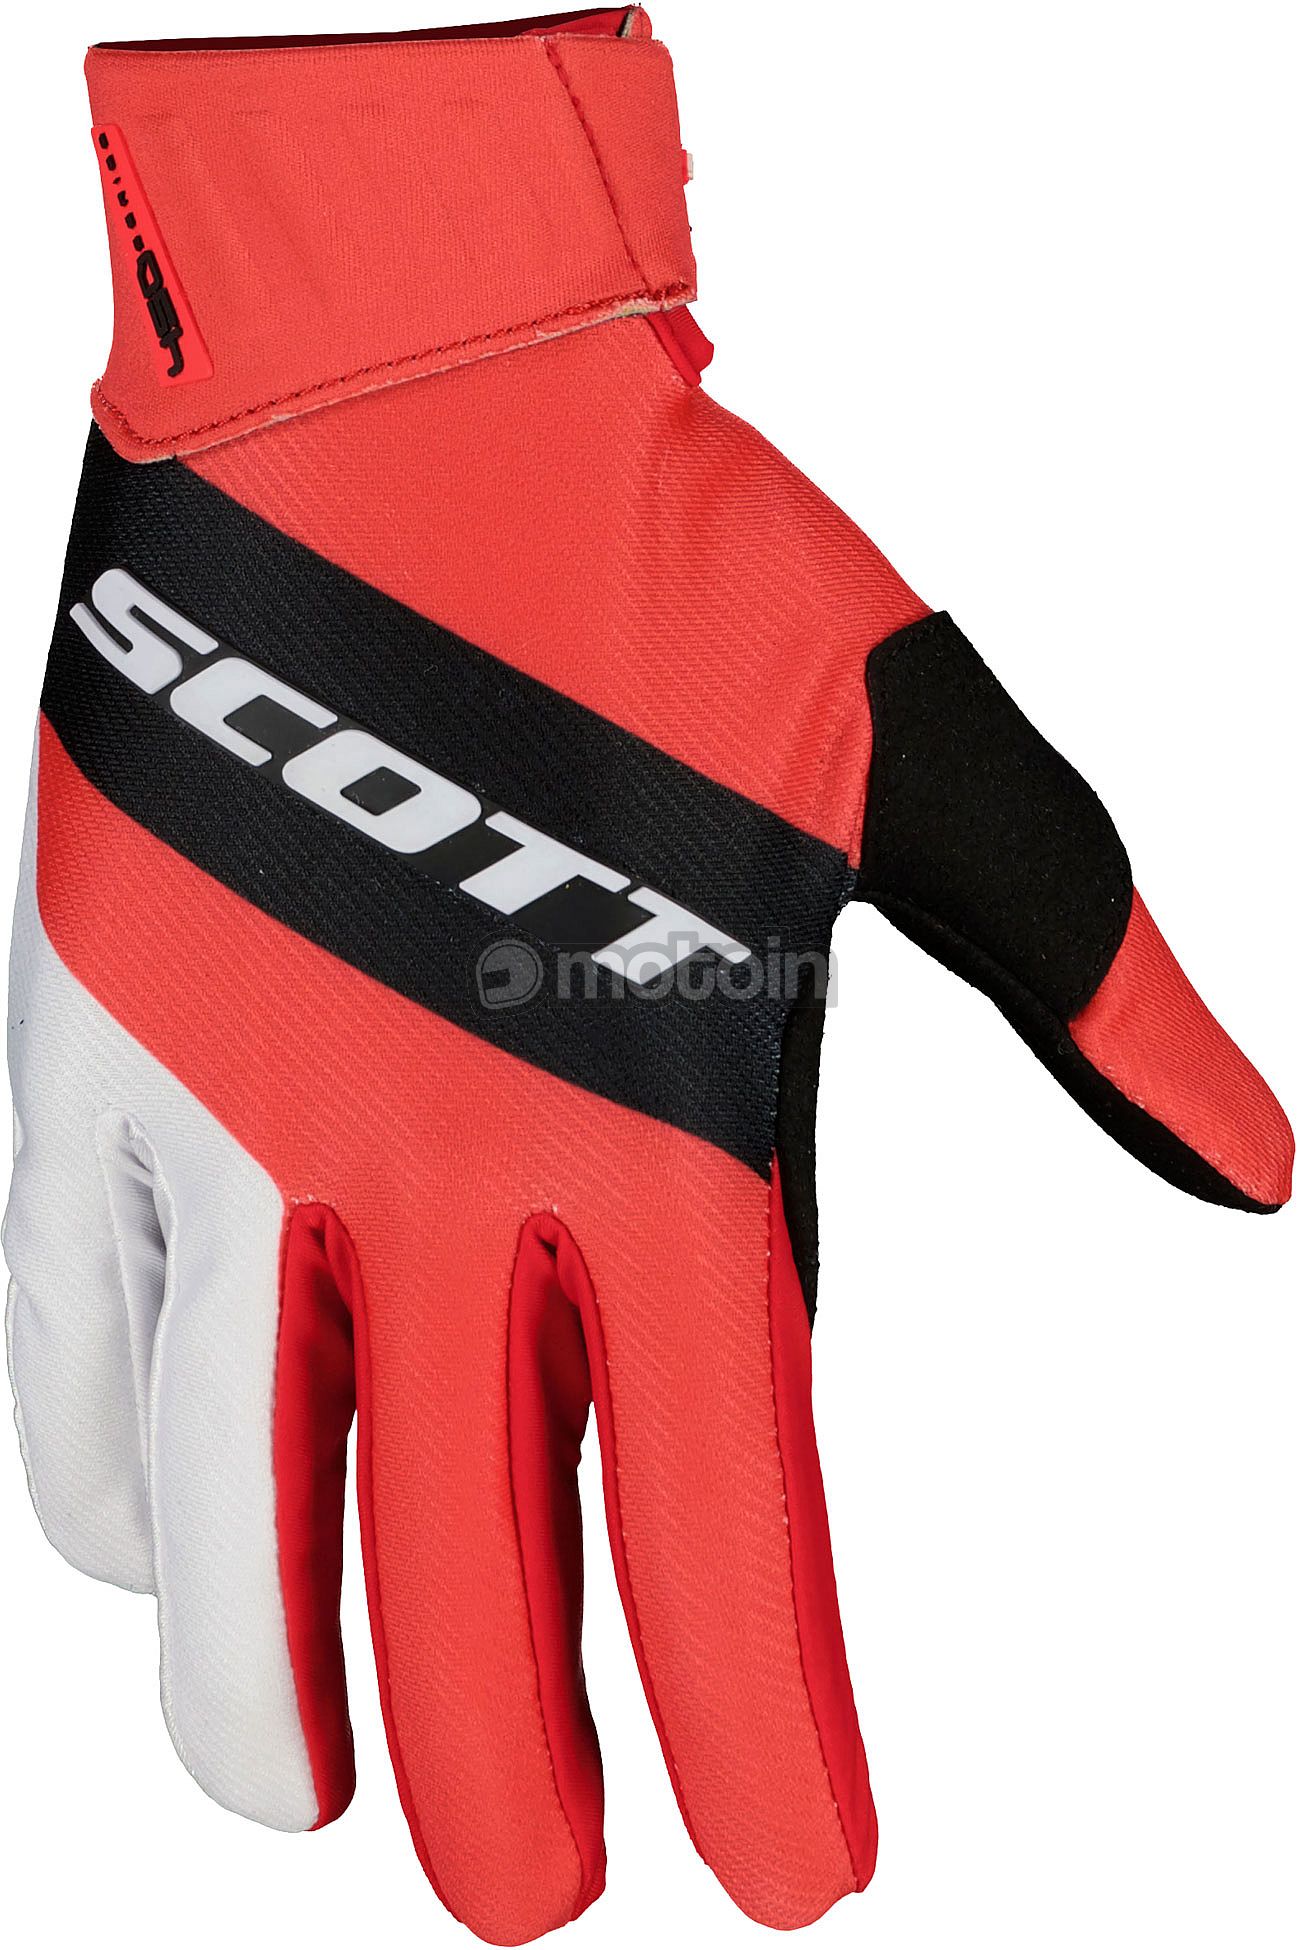 Scott 450 Prospect 1018 S23, перчатки